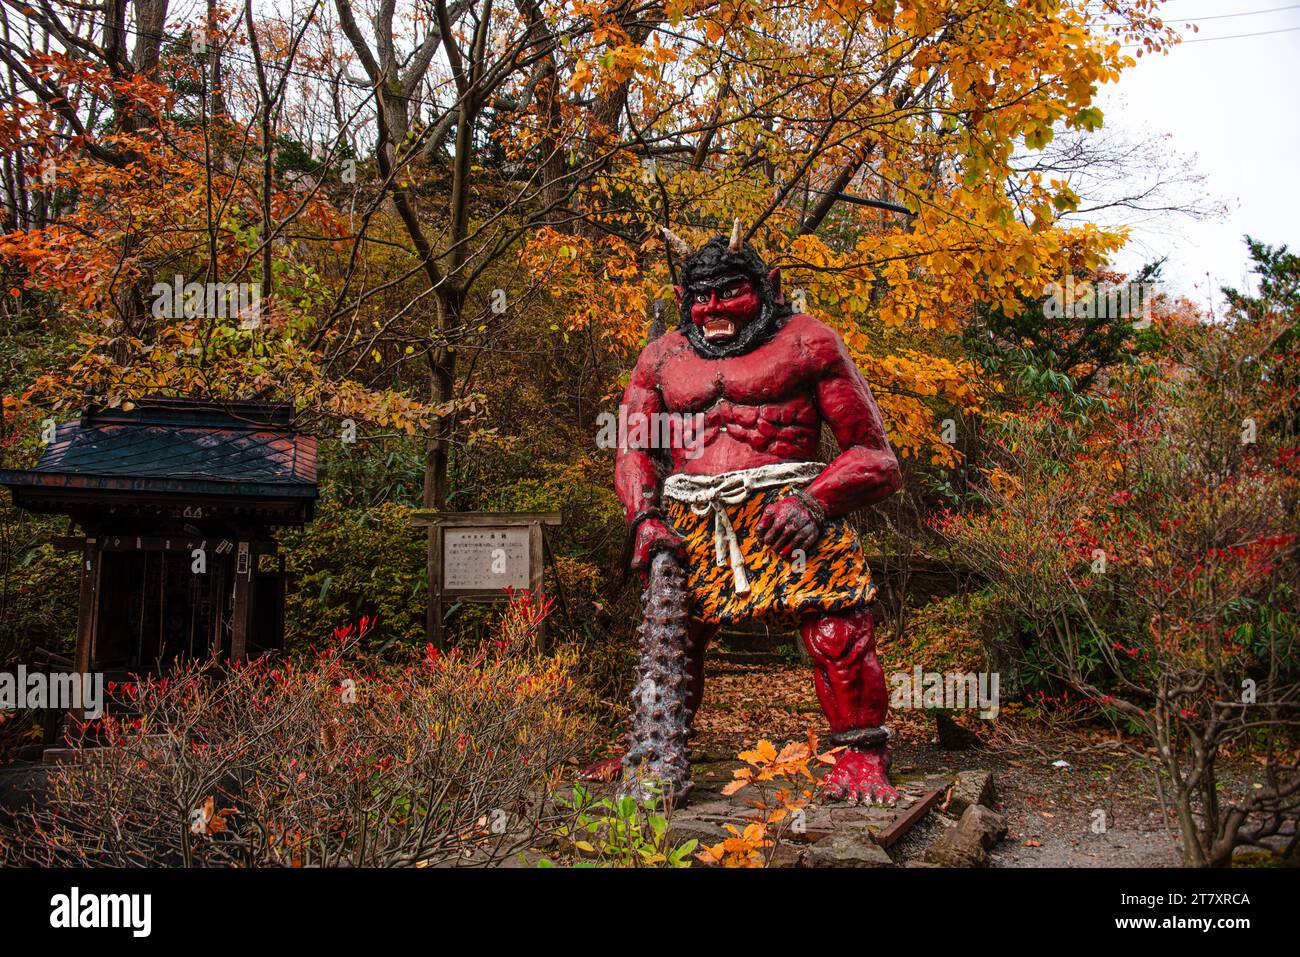 Standing red demon statue with a big club in autmn forest, Noboribetsu, Hokkaido, Japan, Asia Stock Photo